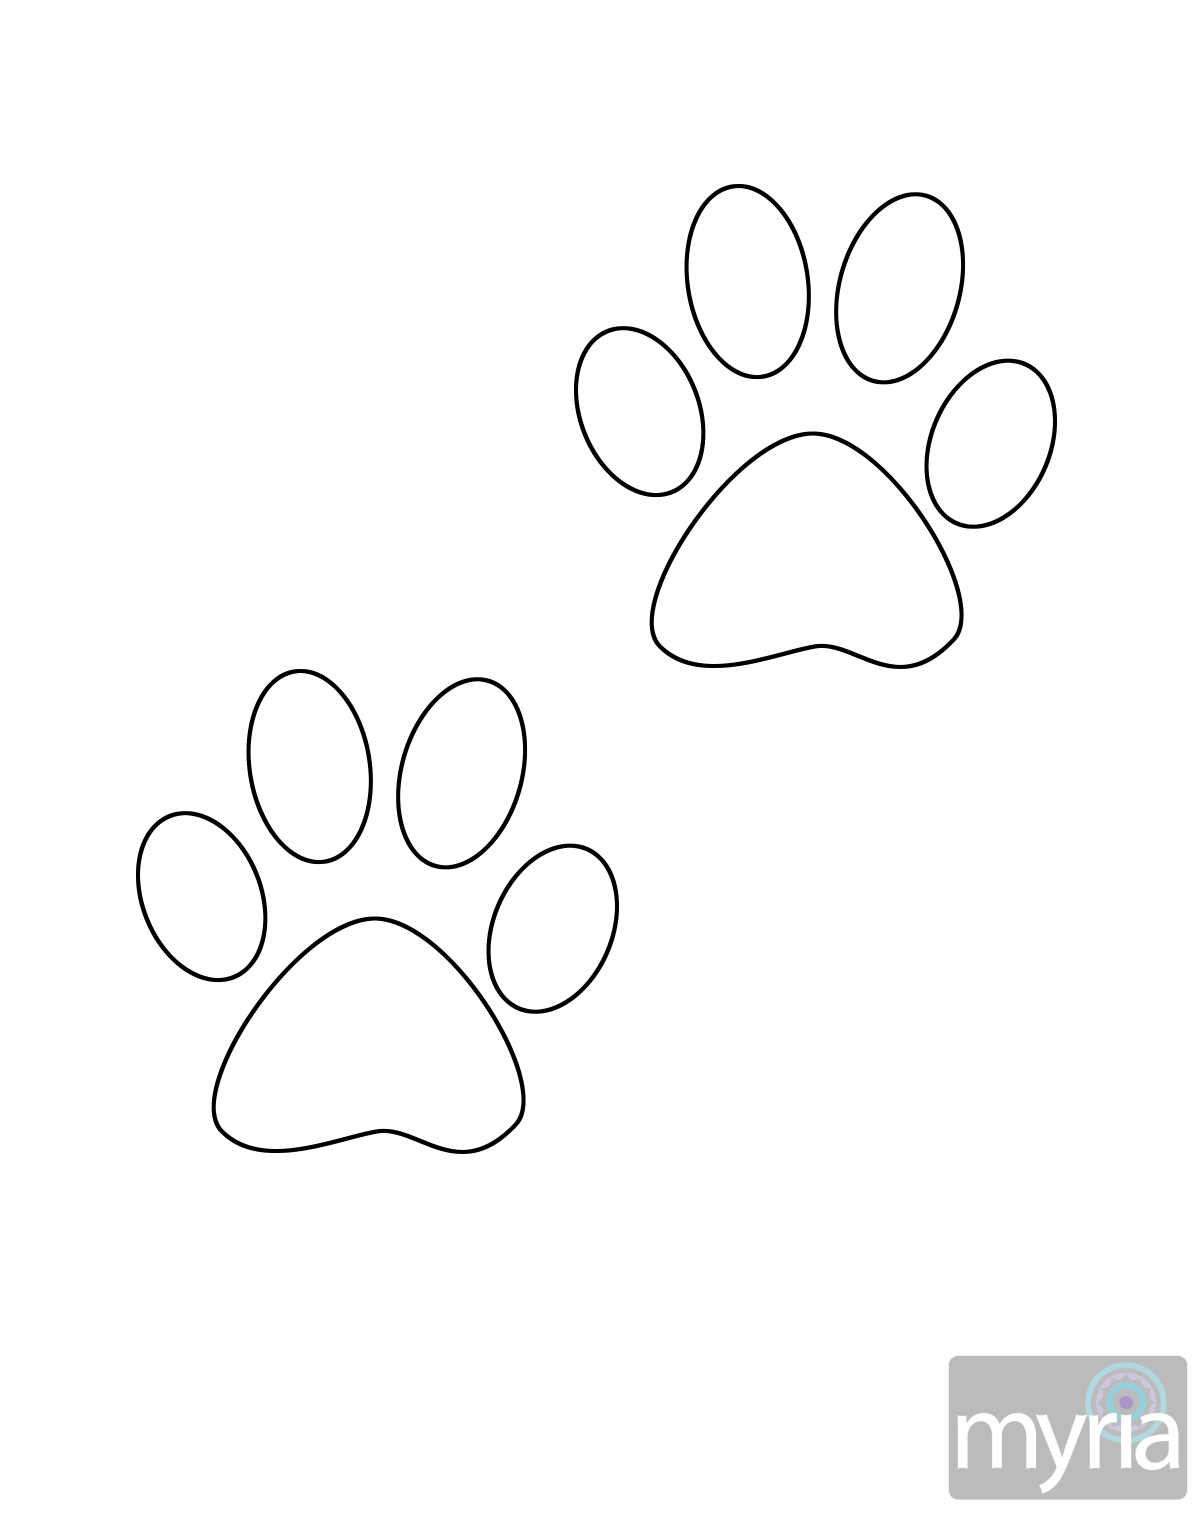 11-dog-stencils-designs-images-free-printable-dog-stencils-free